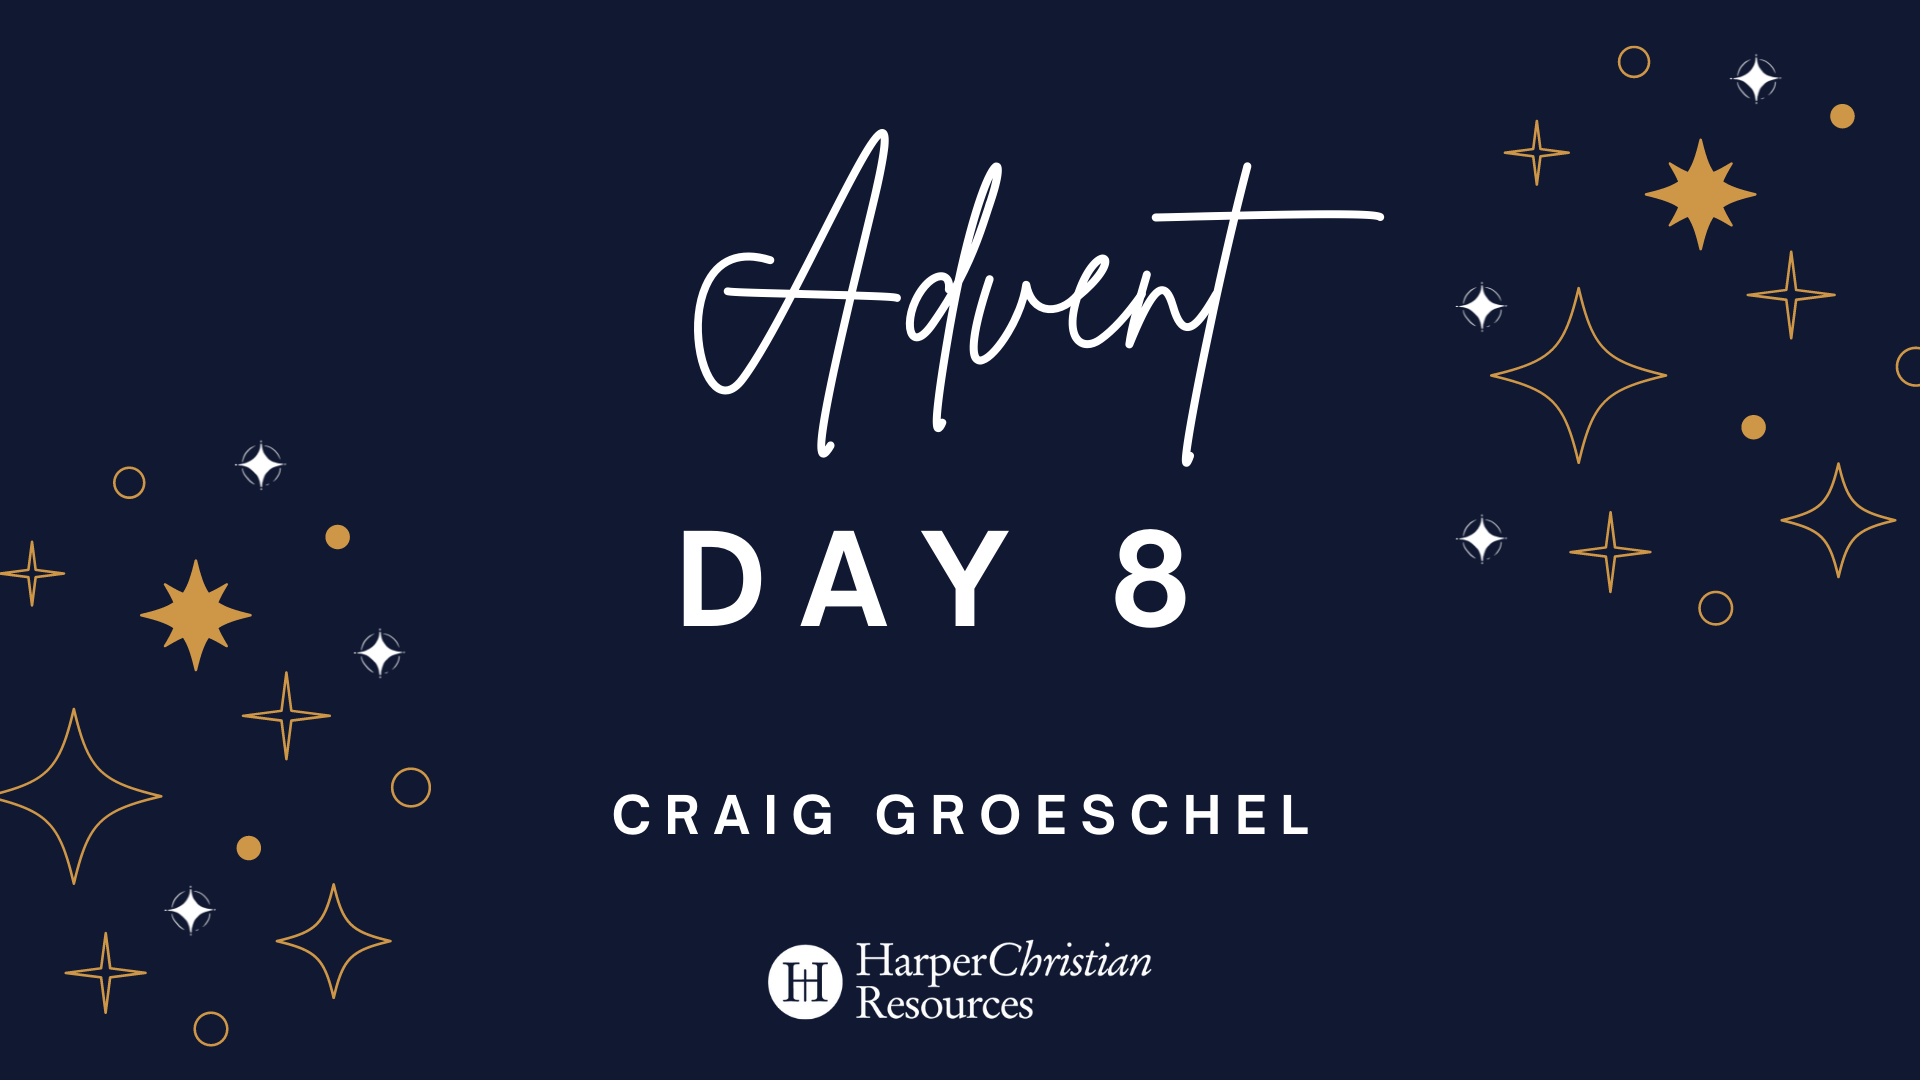 Advent Day 8: A message from Craig Groeschel